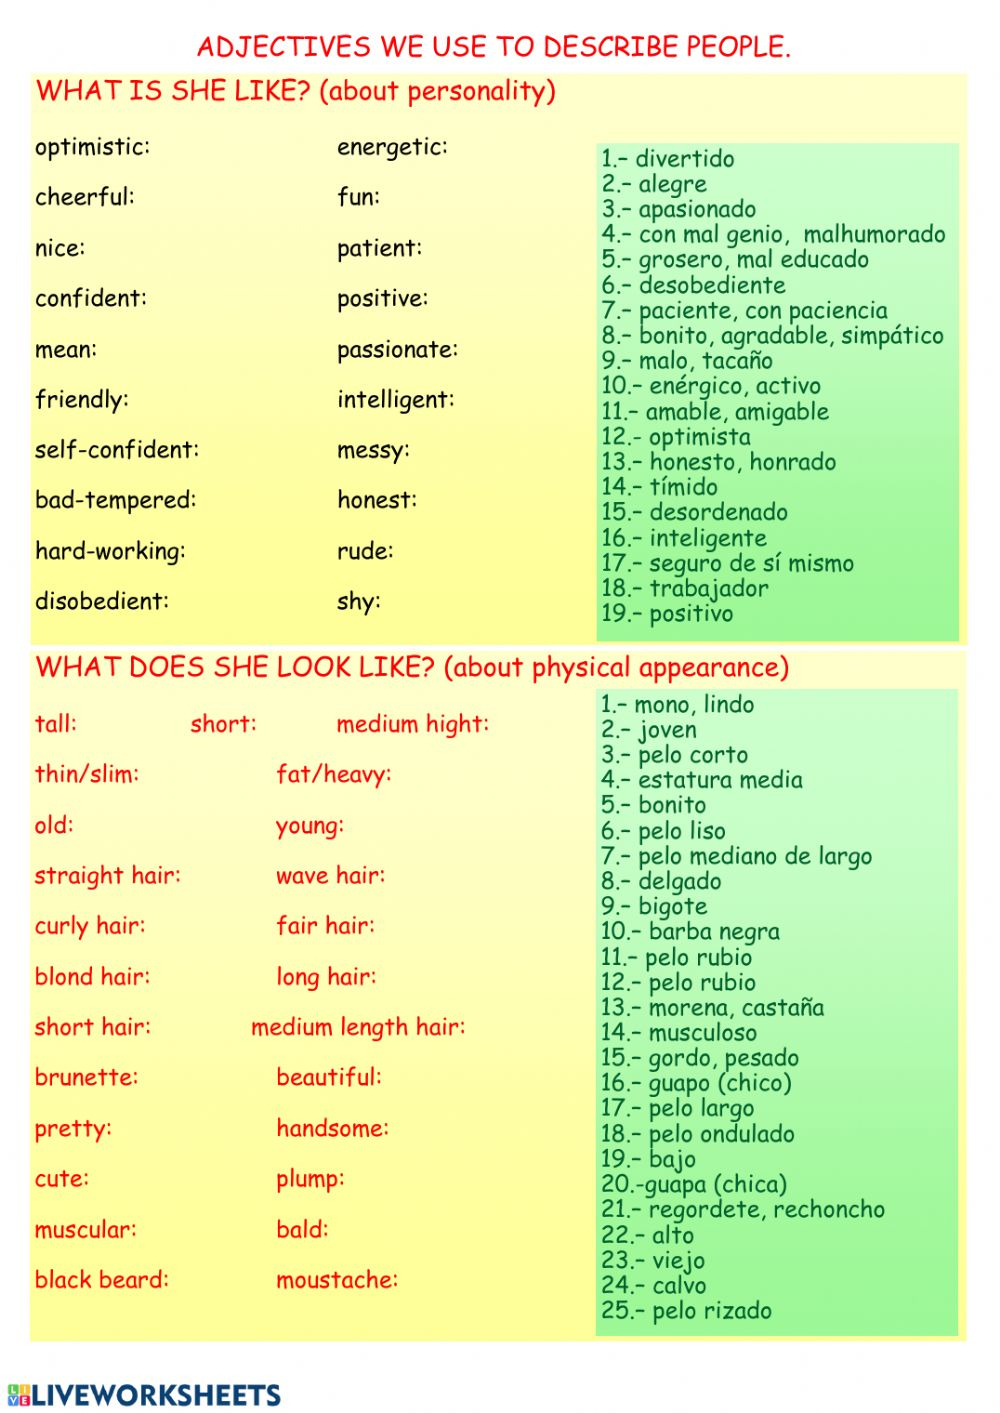 adjectives-to-describe-people-worksheet-adjectiveworksheets